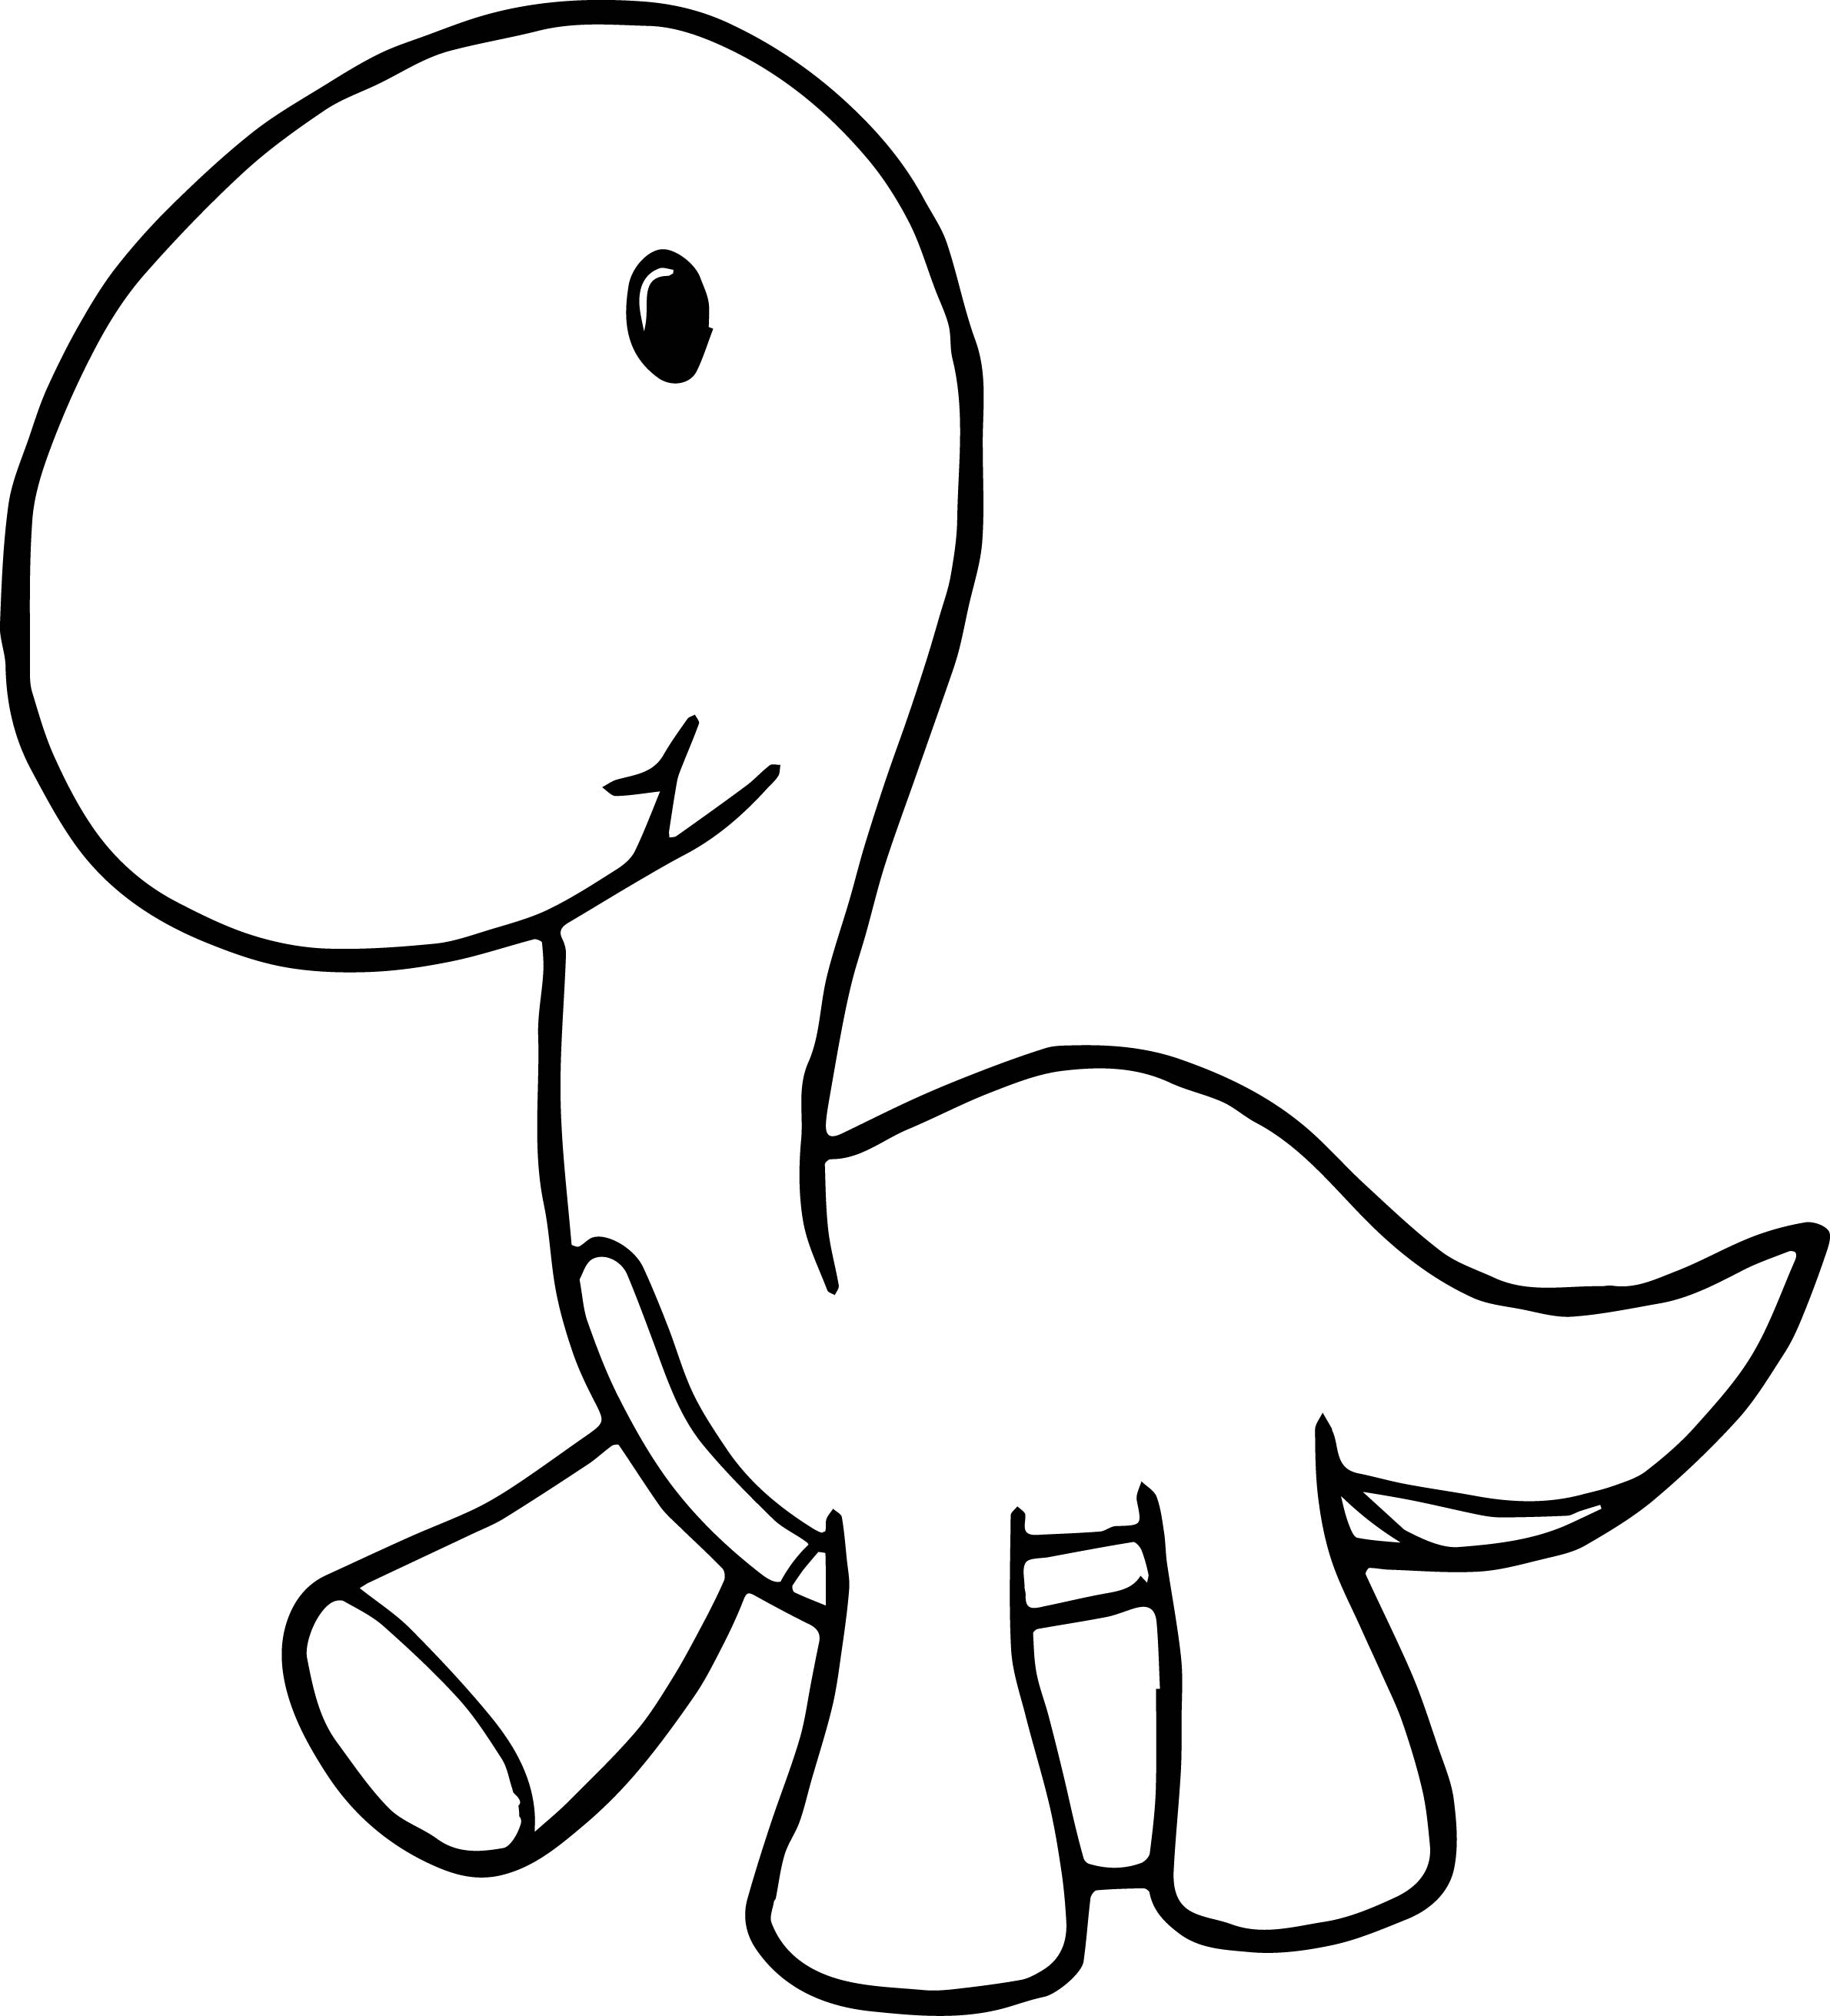 Baby Dino Drawing at GetDrawings | Free download